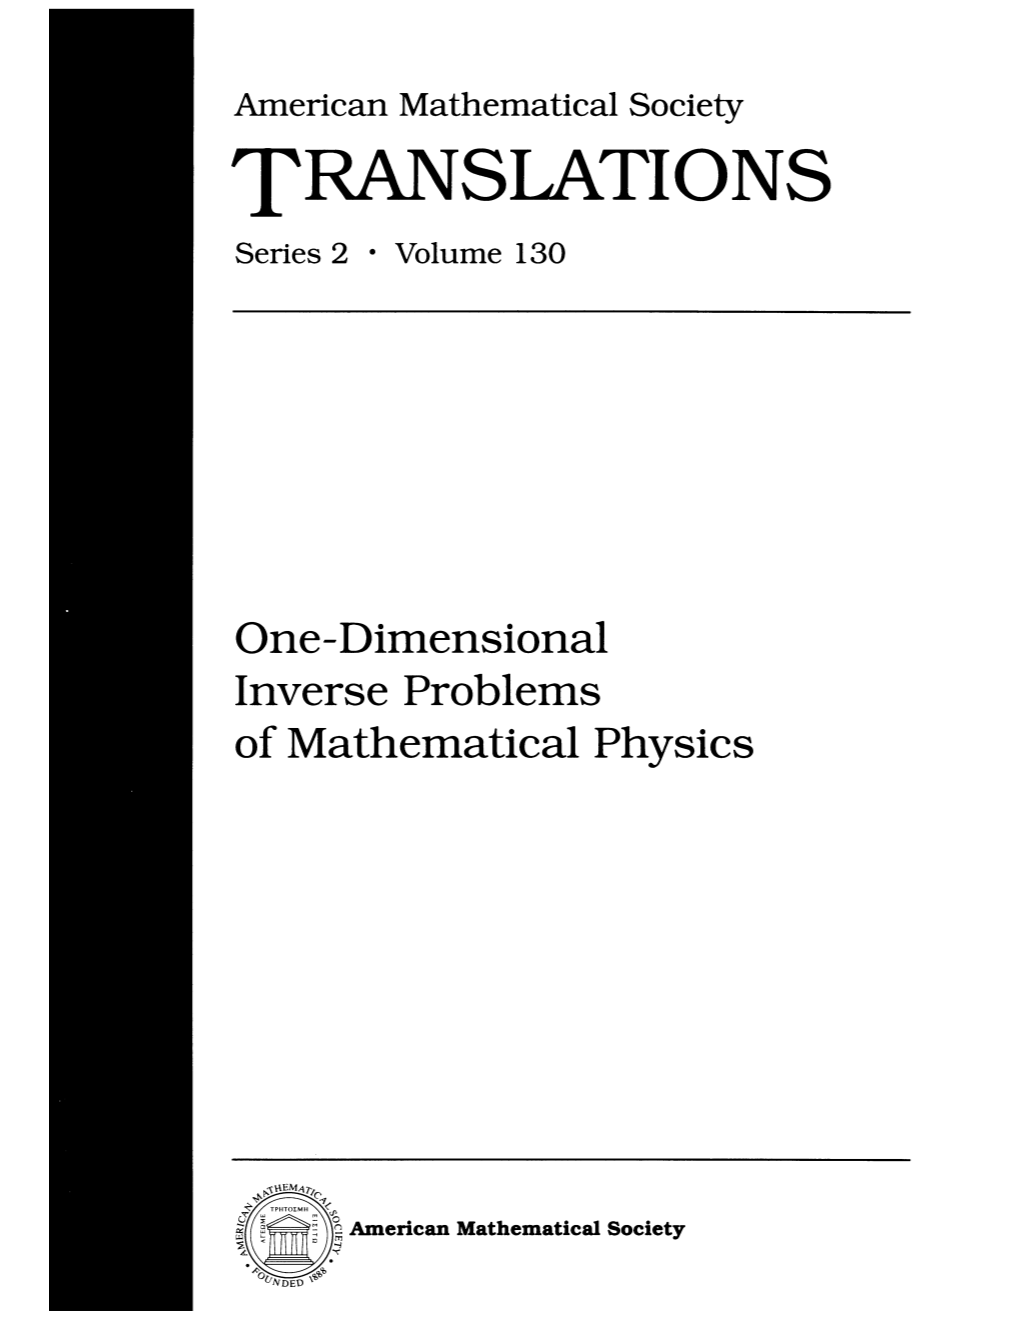 American Mathematical Society TRANSLATIONS Series 2 • Volume 130